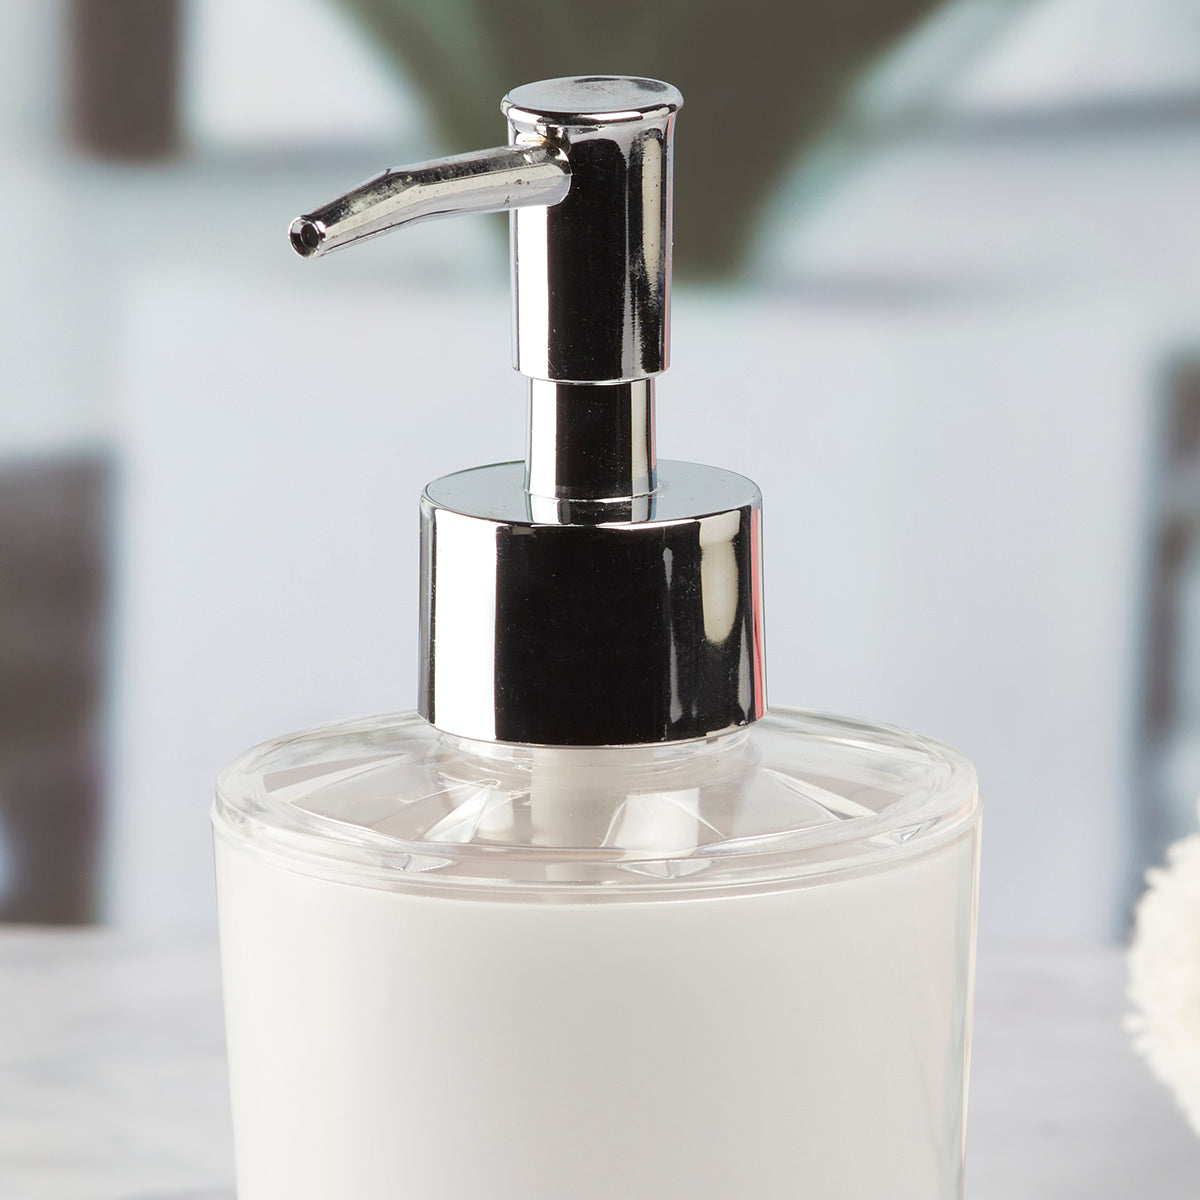 Acrylic Soap Dispenser Pump for Bathroom(8457)